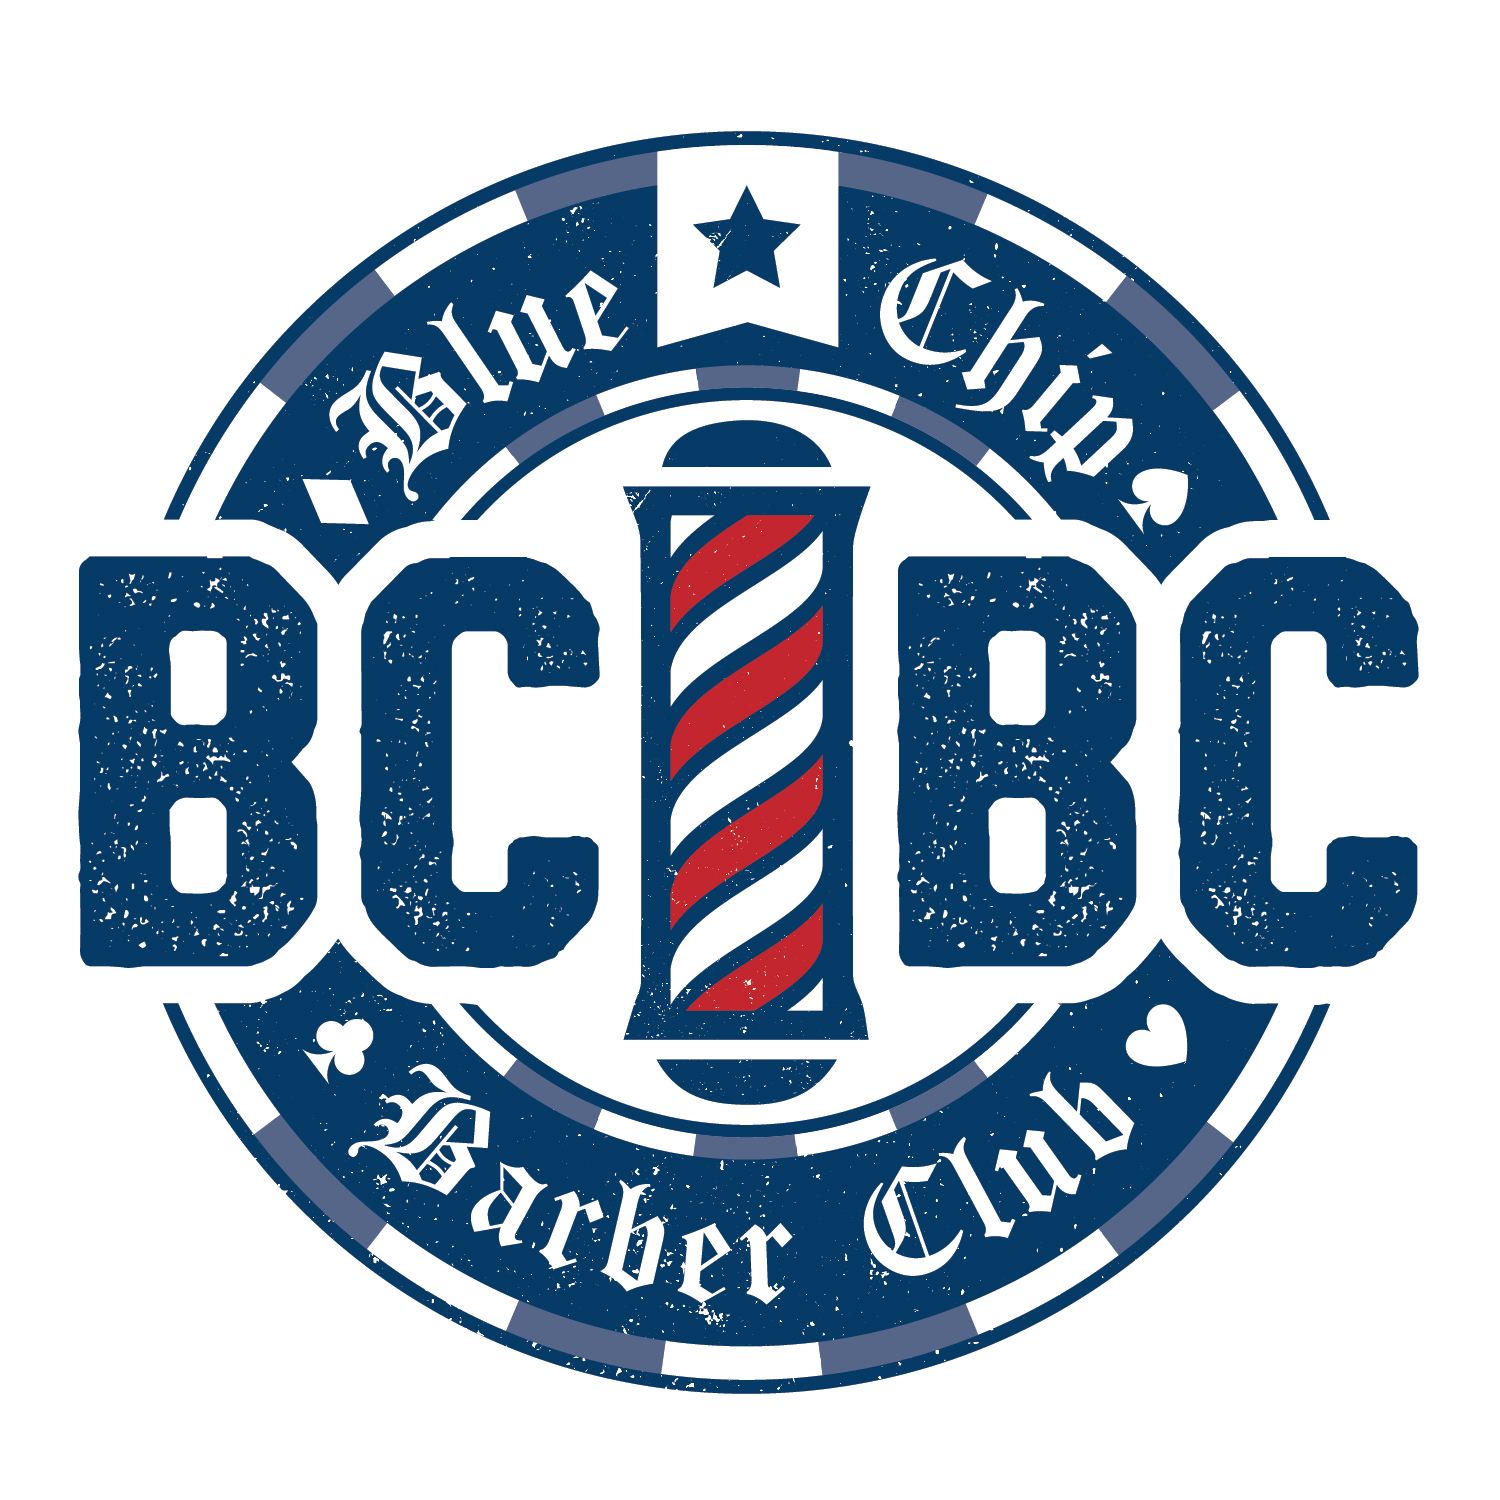     Blue Chip Barber Club